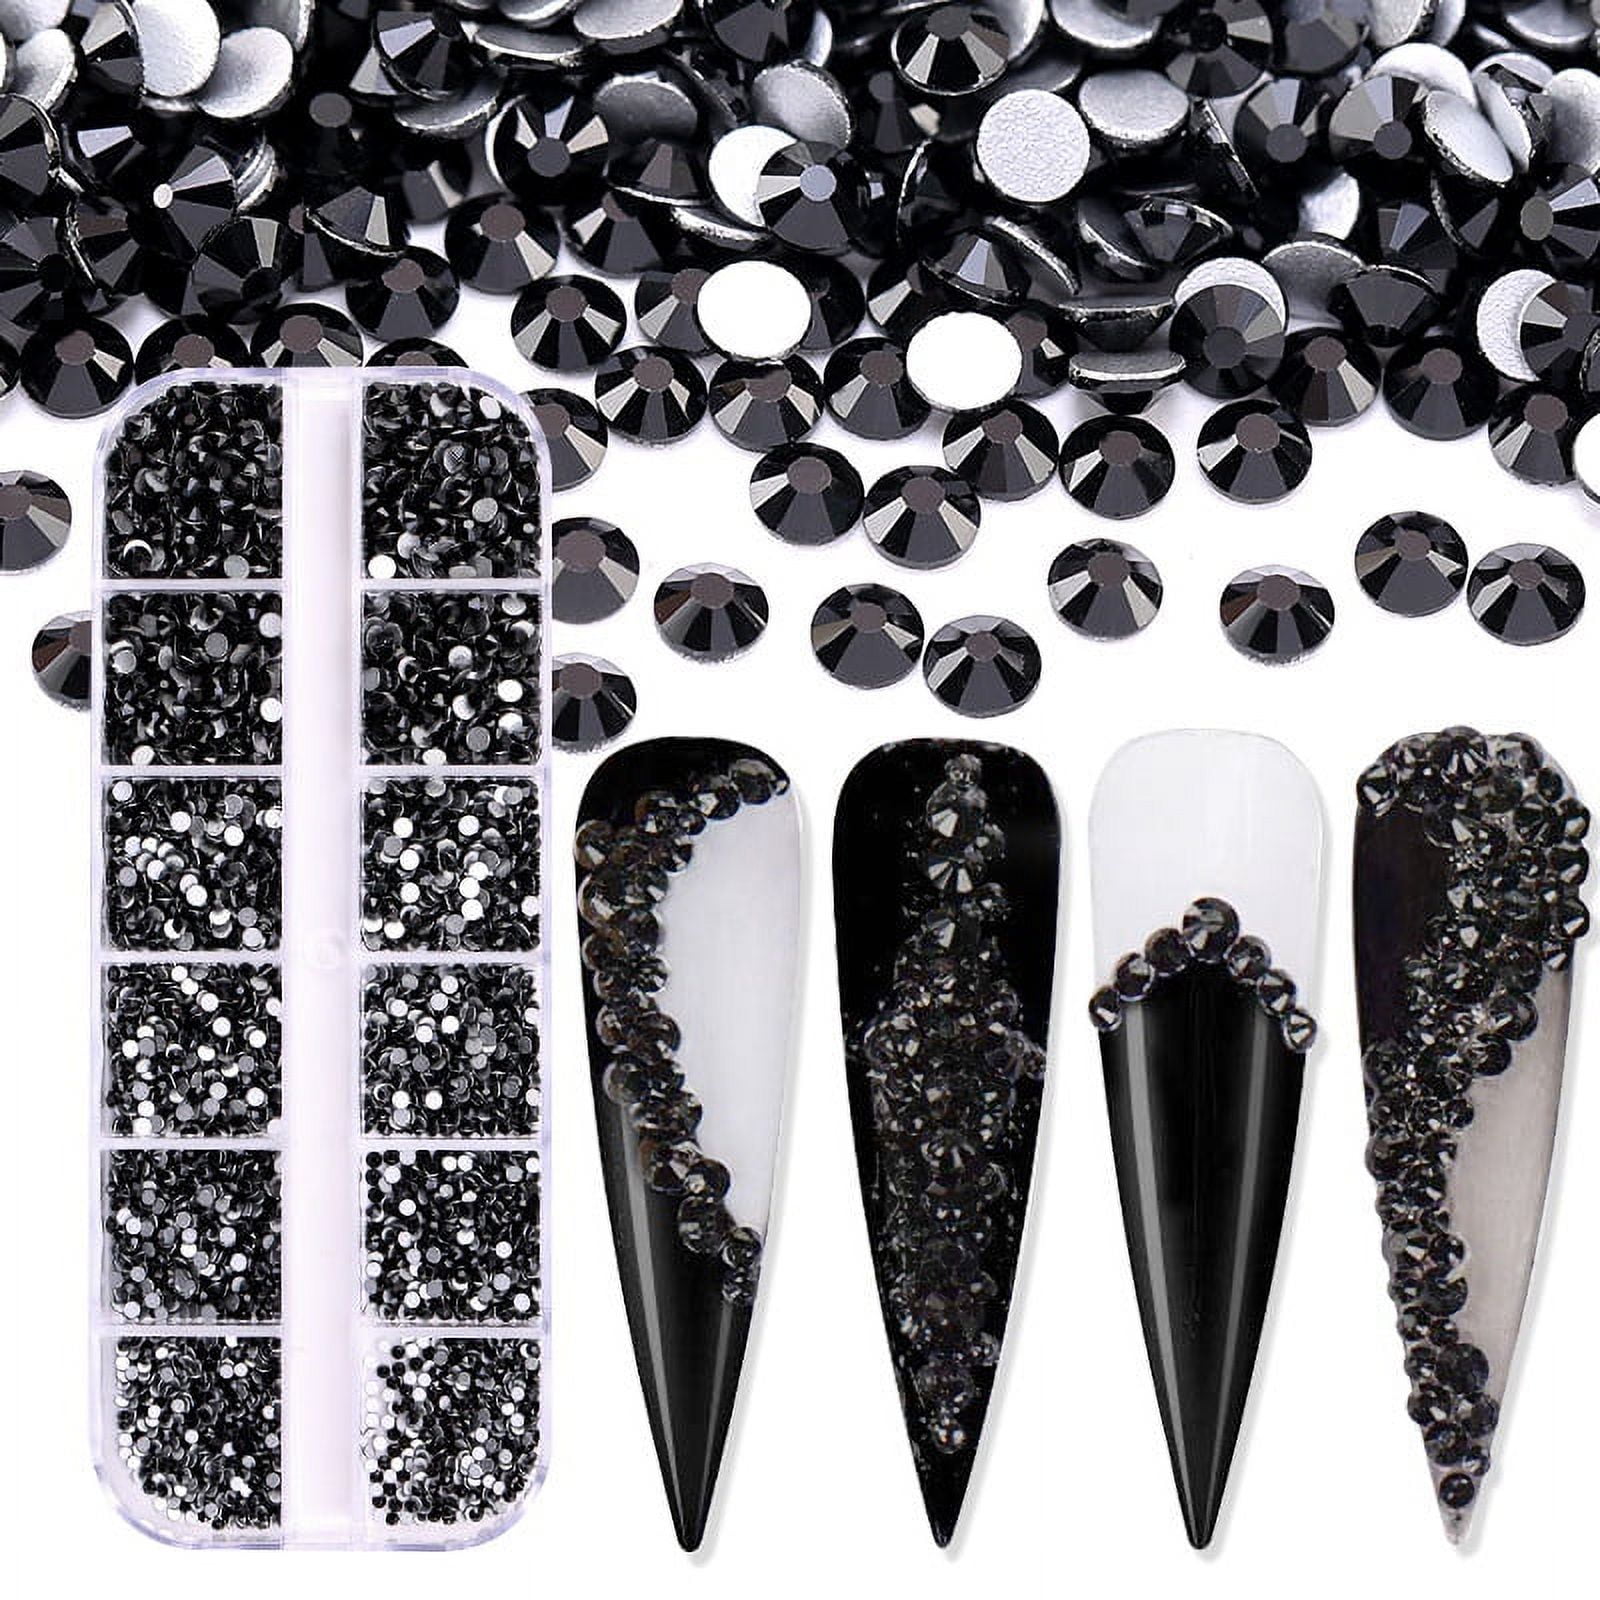 Novani Black Rhinestones, Flatback Crystal Loose Gemstones 1440pcs Glass  Rhinestones for Clothes Shoes Crafts Makeup Nail Art and DIY